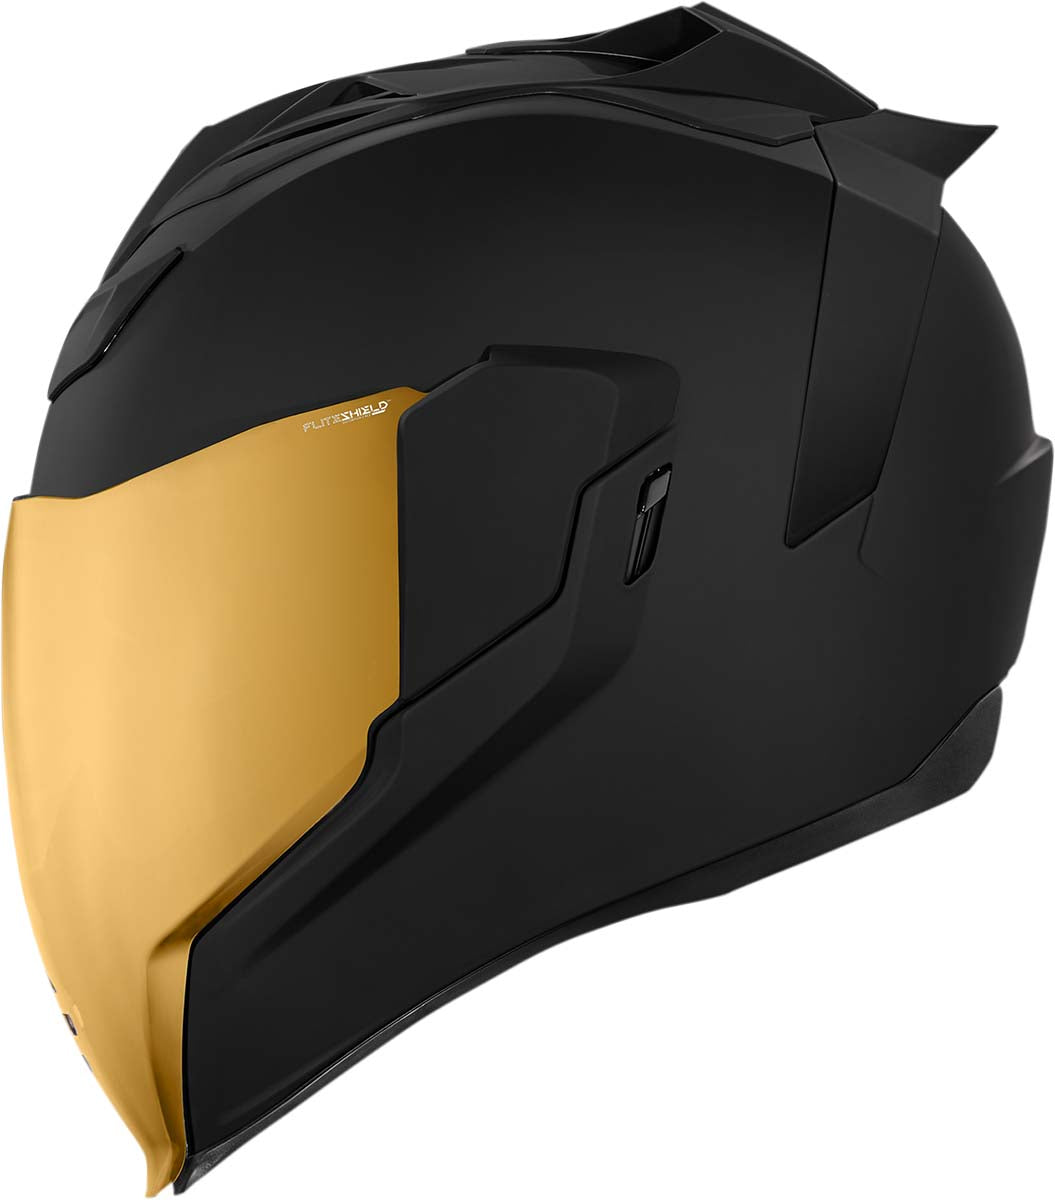 ICON Airflite™ Helmet - Peacekeeper - Rubatone Black